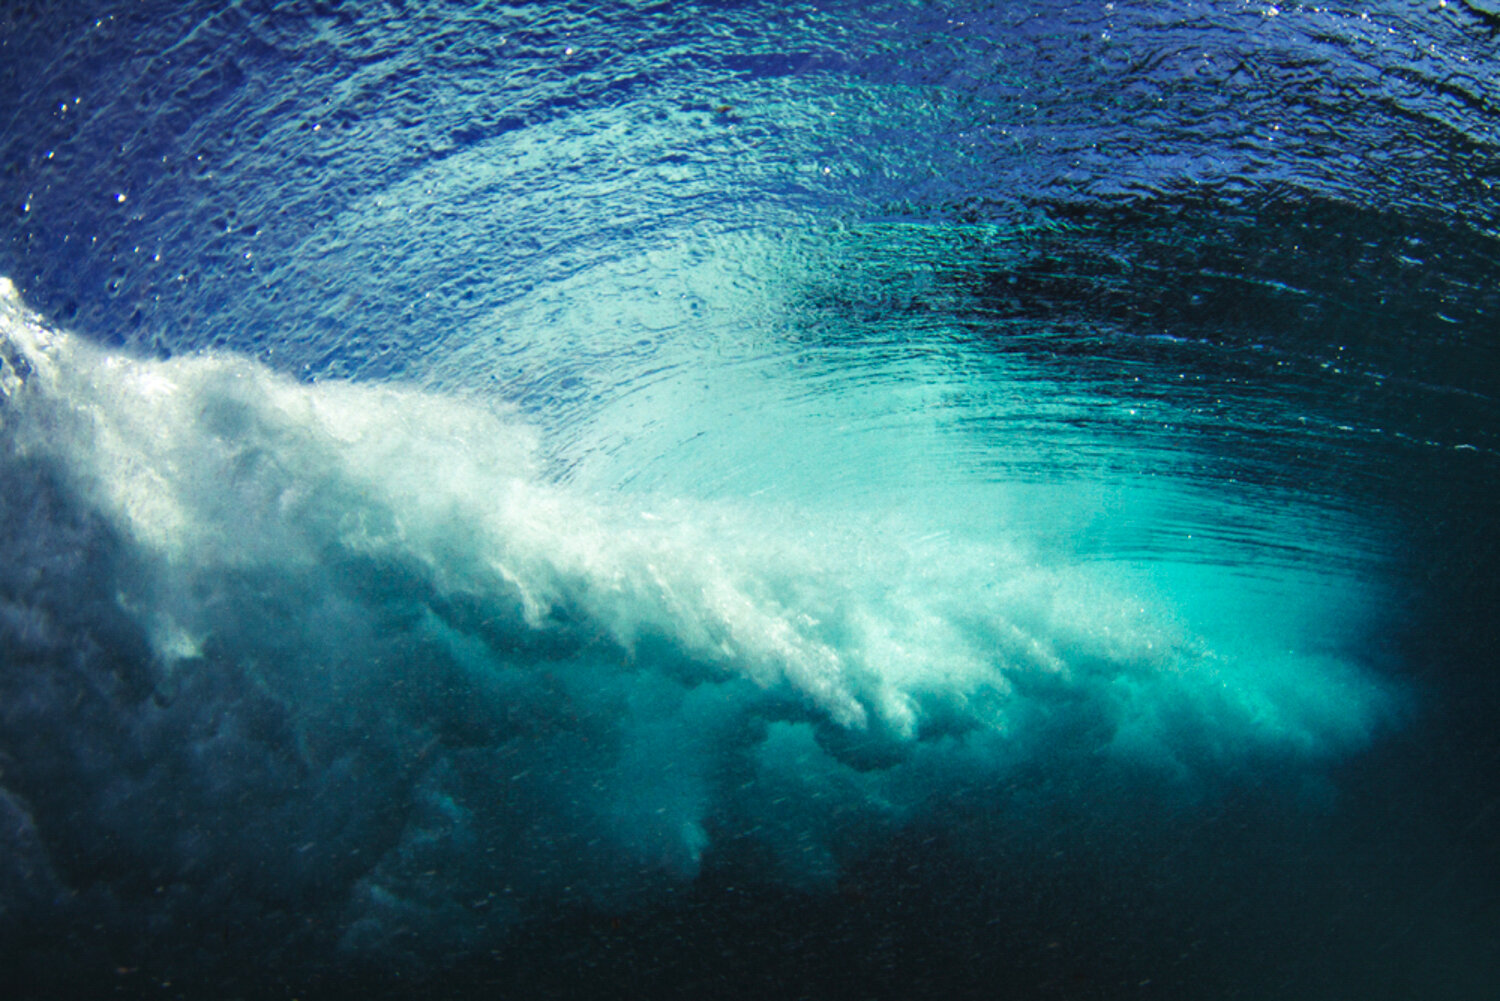 surf surfing lifestyle ocean beach nature photography photographer krista espino underwater travel corse corsica island mediterranean sea europe france french photographe-16.jpg